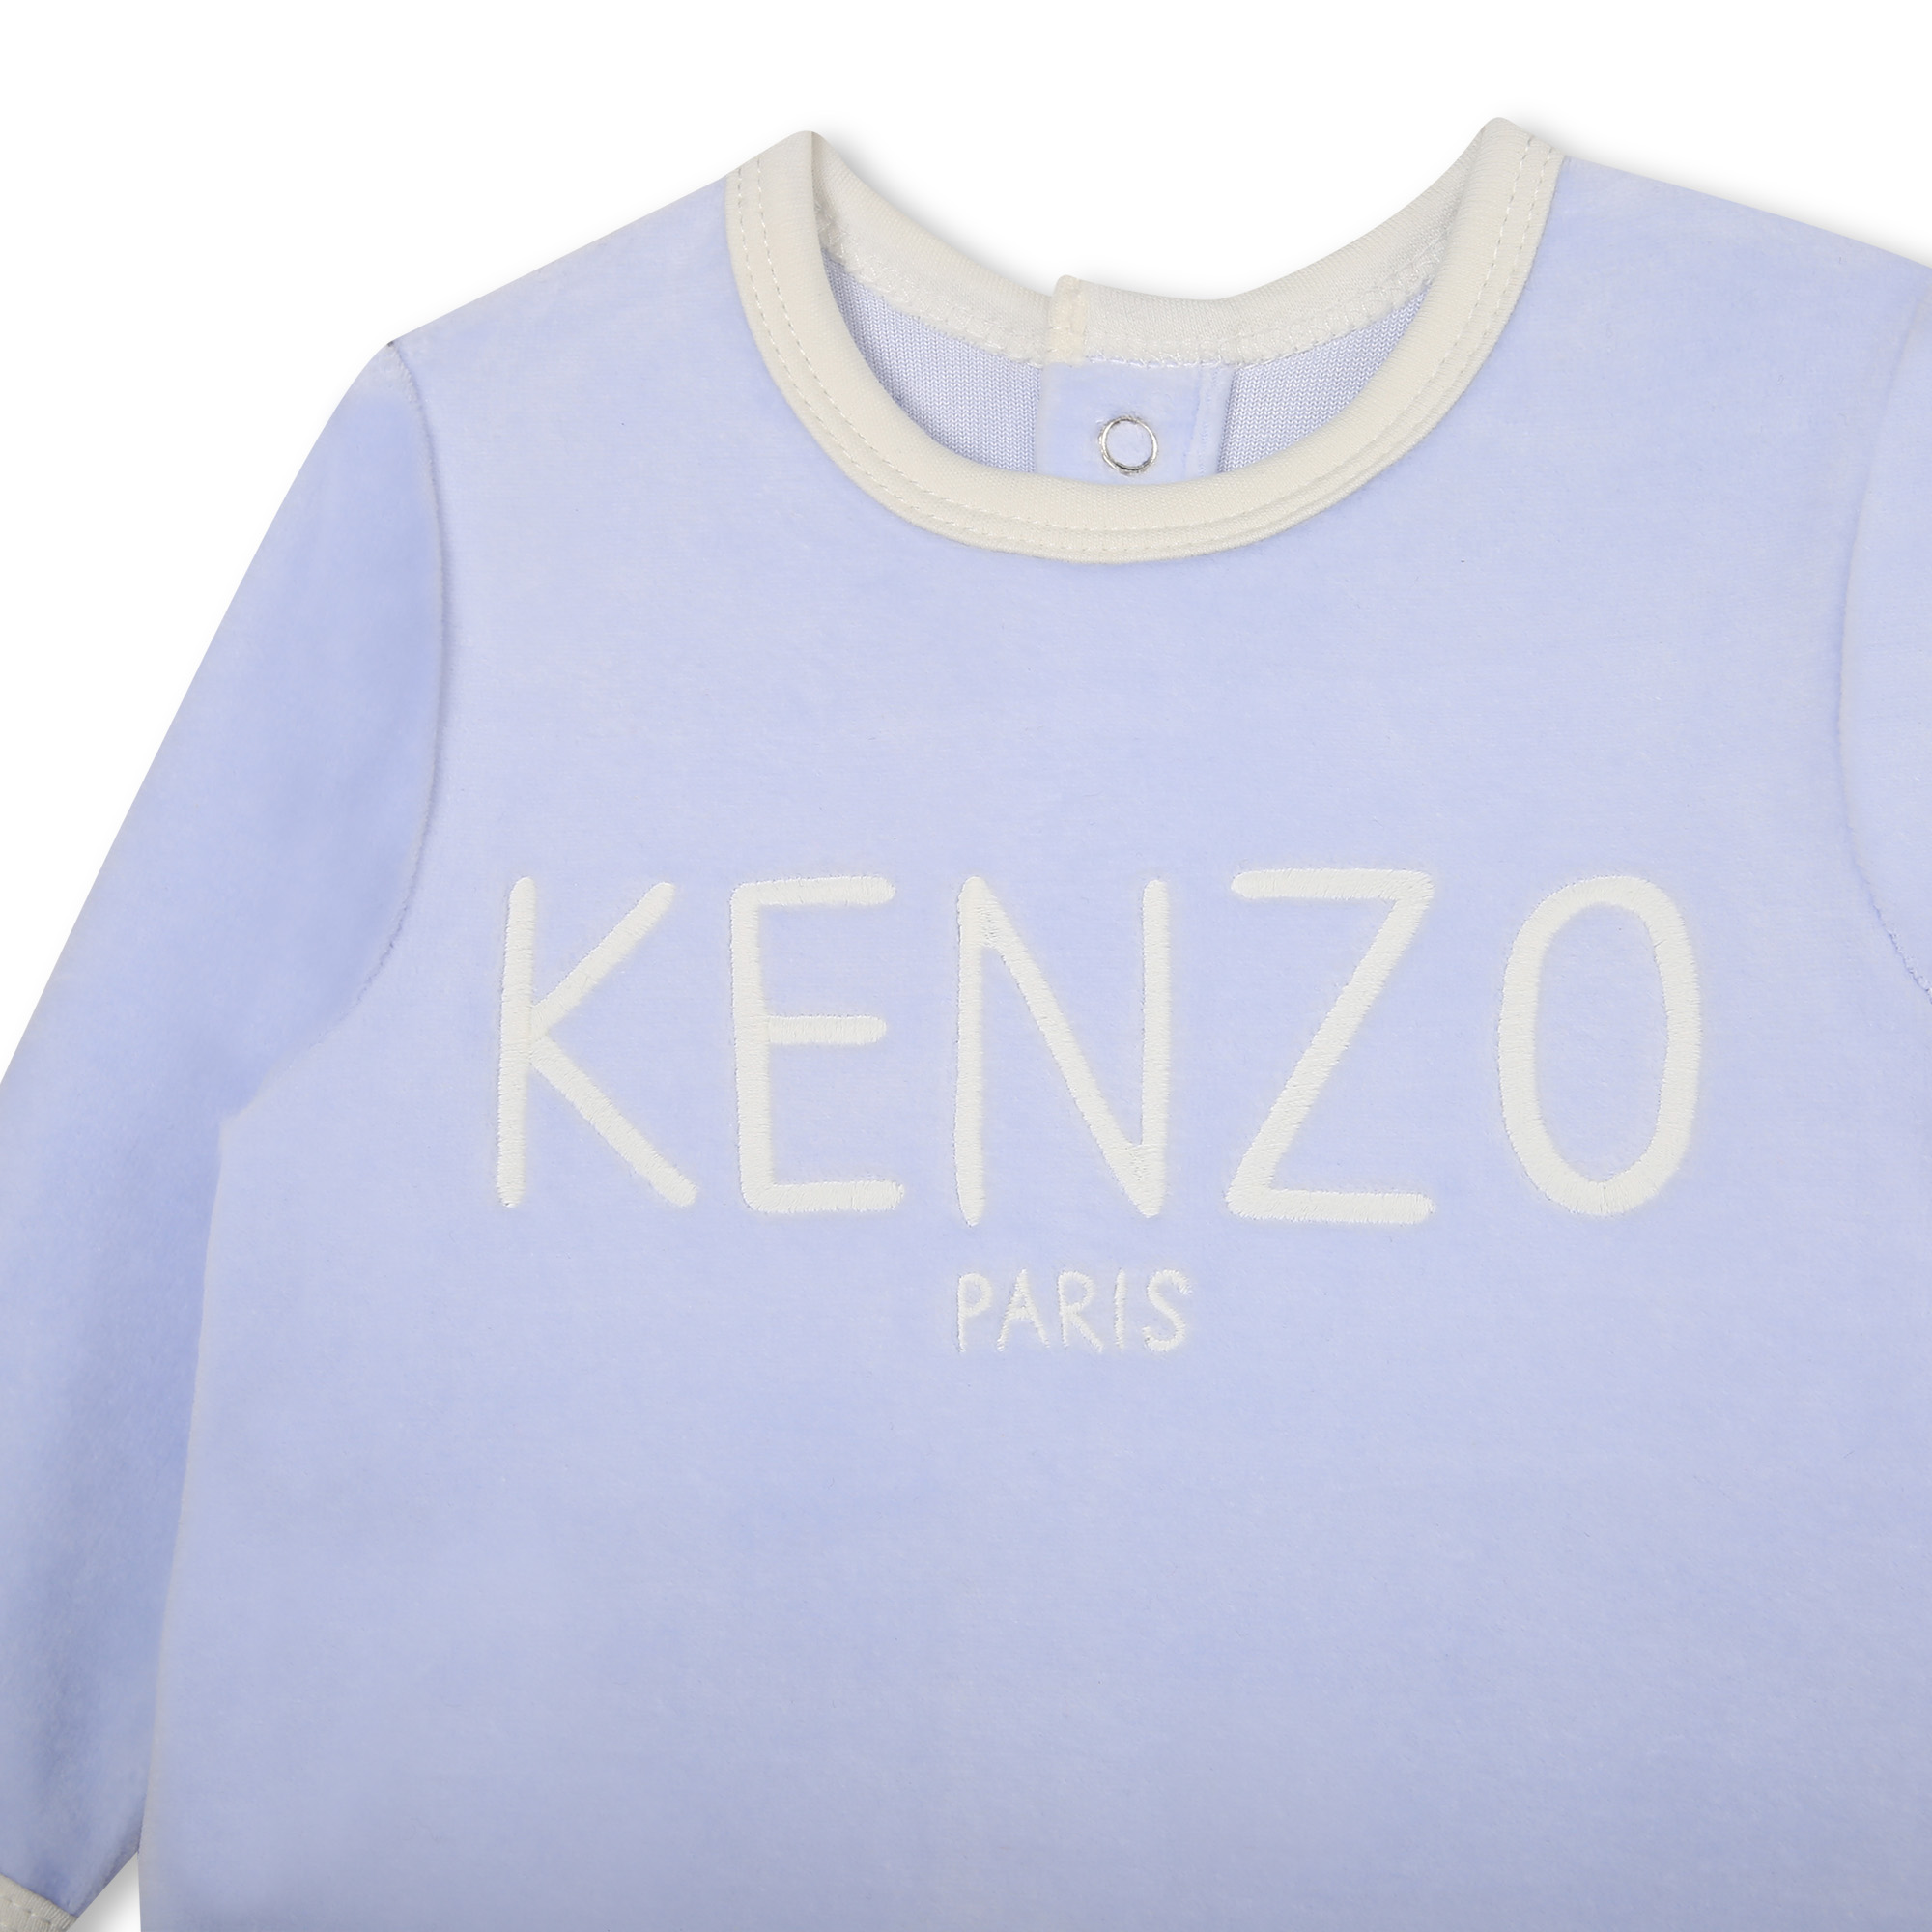 Ensemble pyjama + accessoires KENZO KIDS pour UNISEXE